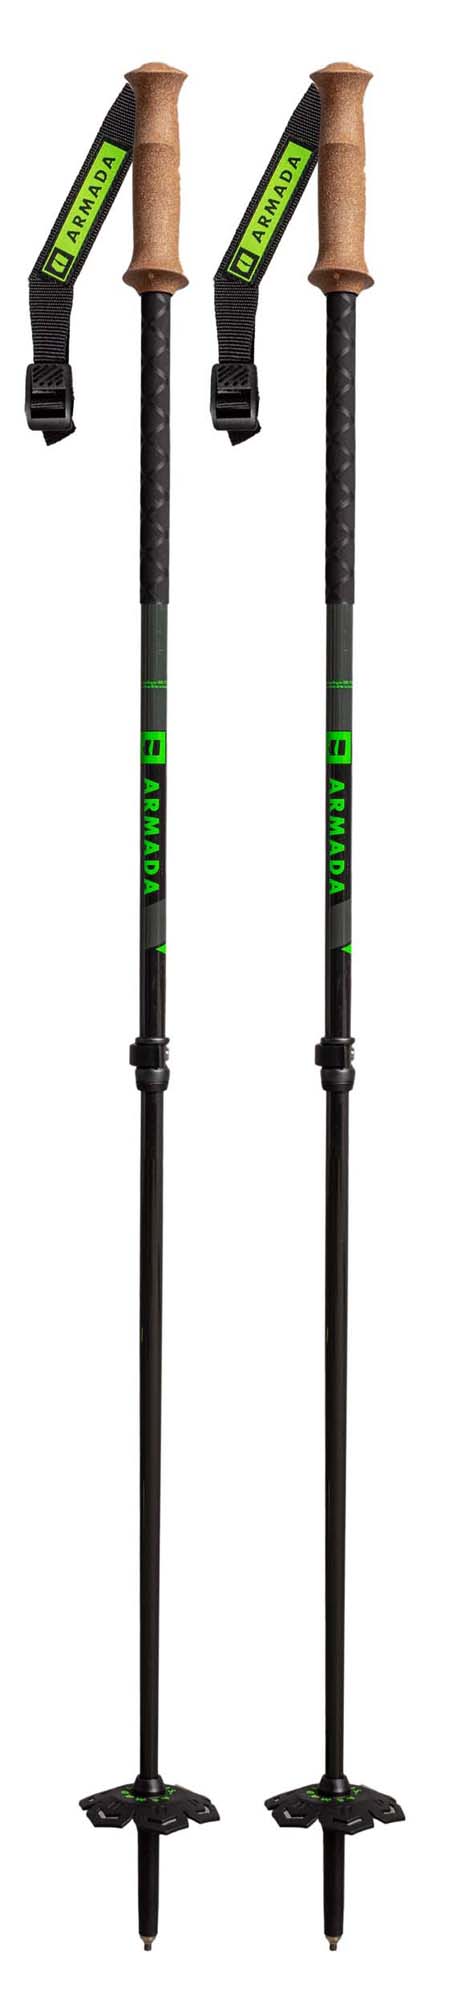 Armada 2023 Carbon Adjustable Ski Poles NEW !! 110-135cm